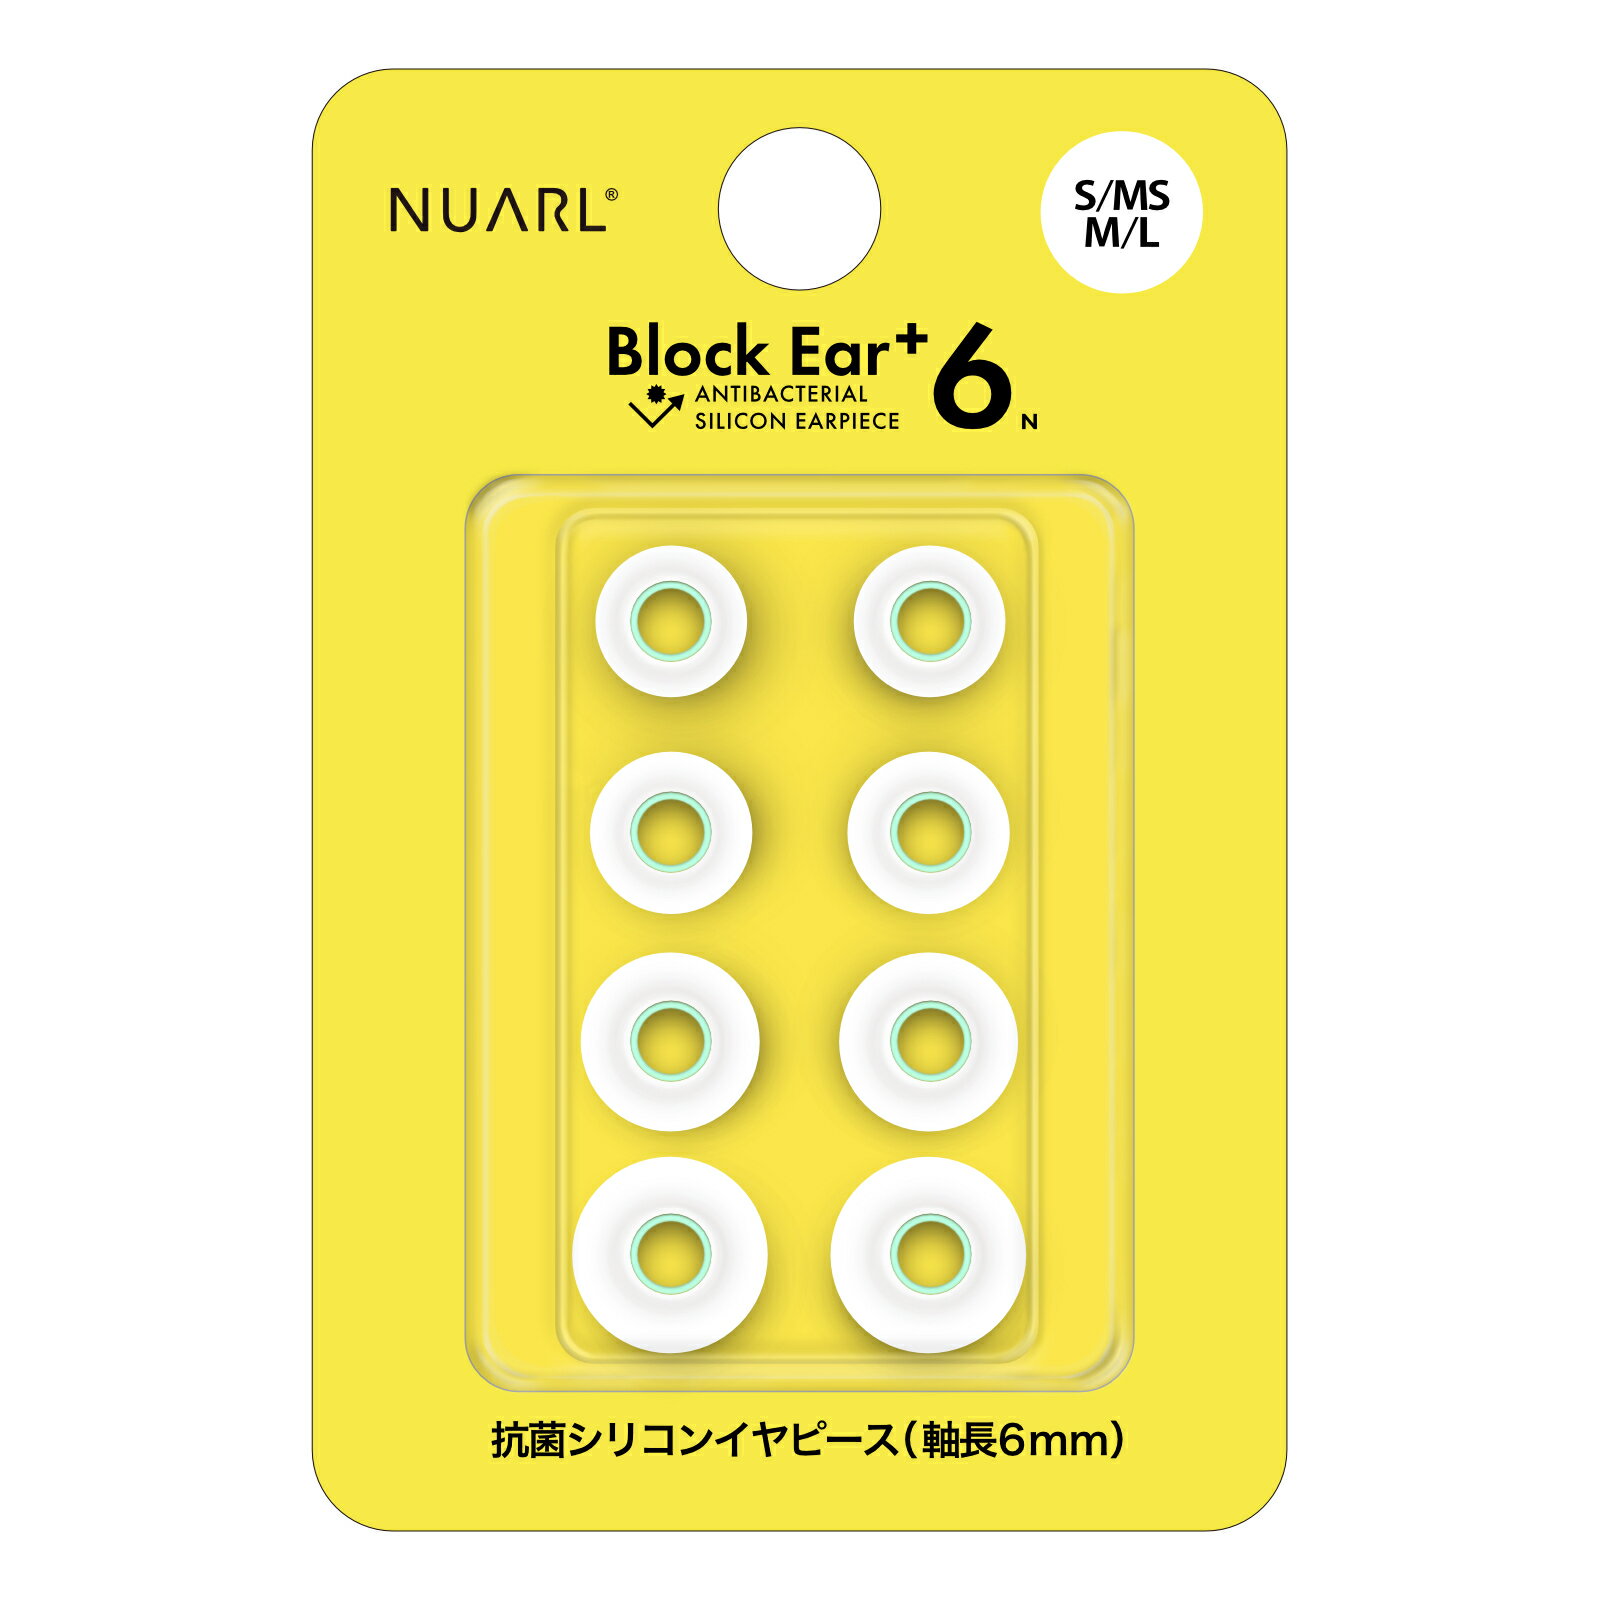 NUARL Block Ear+6N 抗菌シリコンイヤーピース